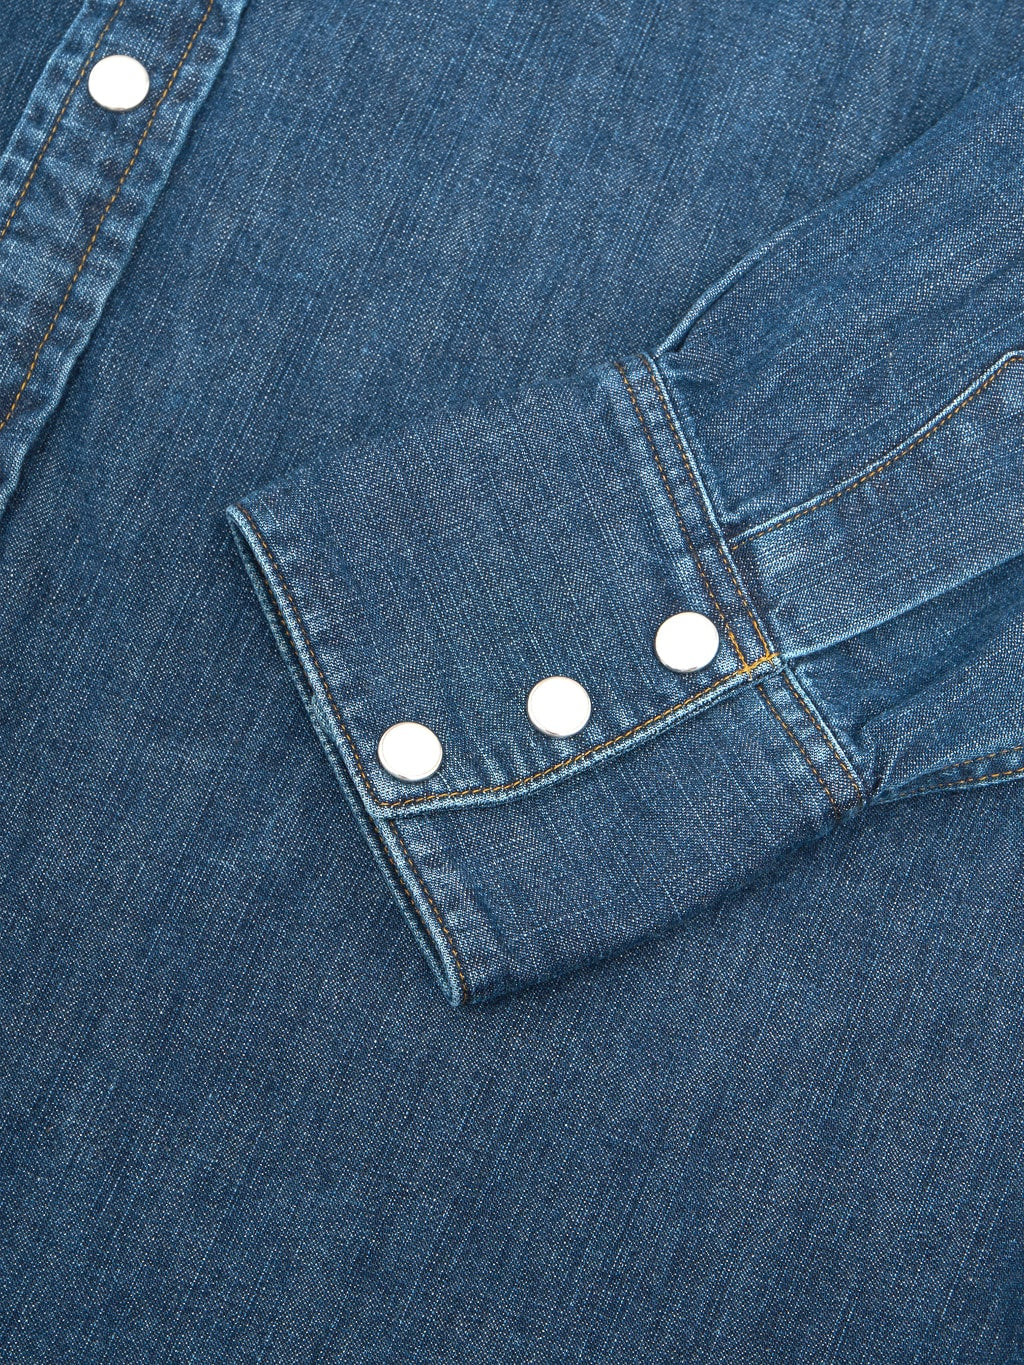 Stevenson overall cody shirt faded indigo denim buttons detail